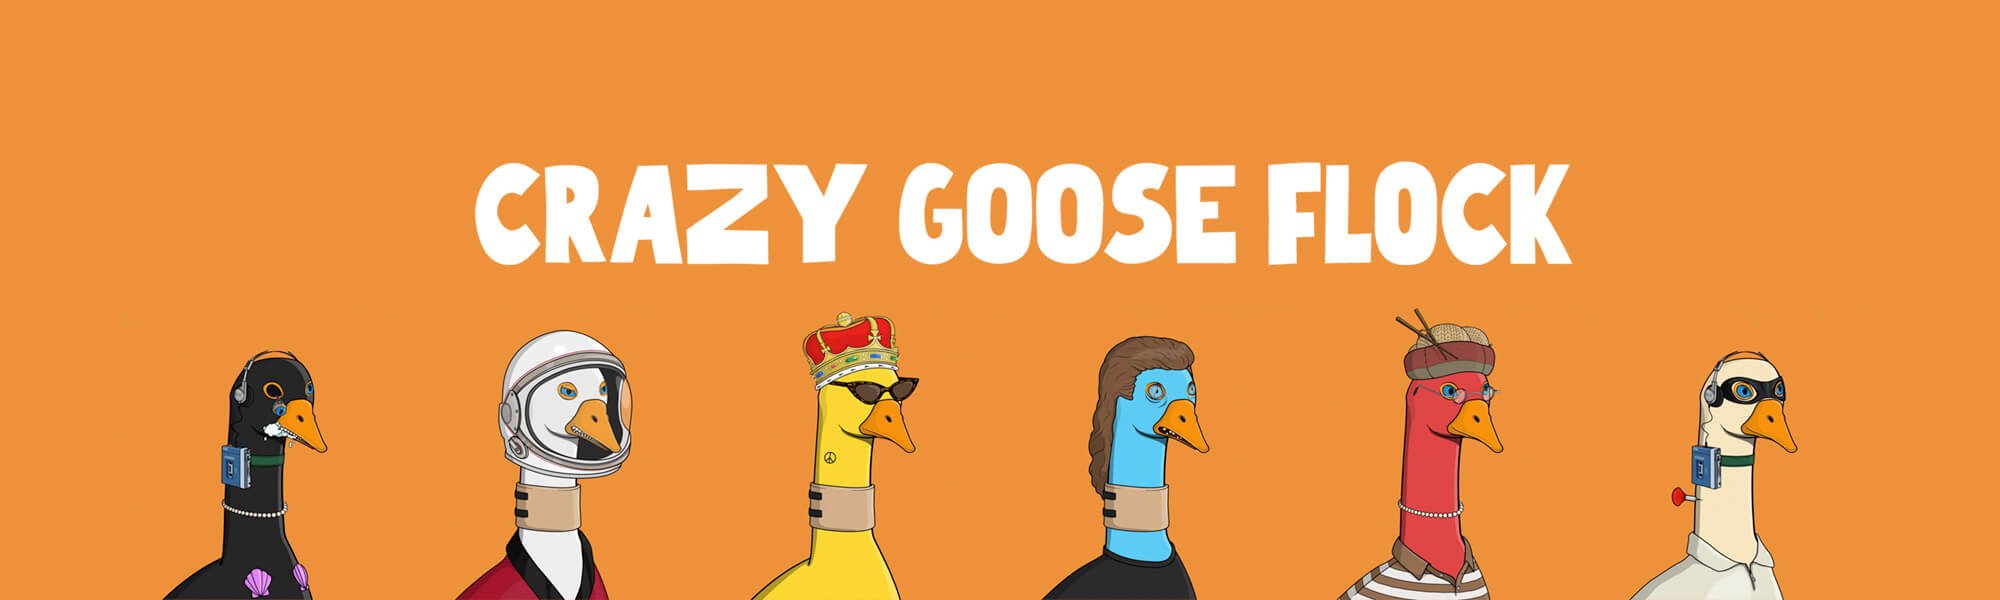 Crazy Goose Flock banner